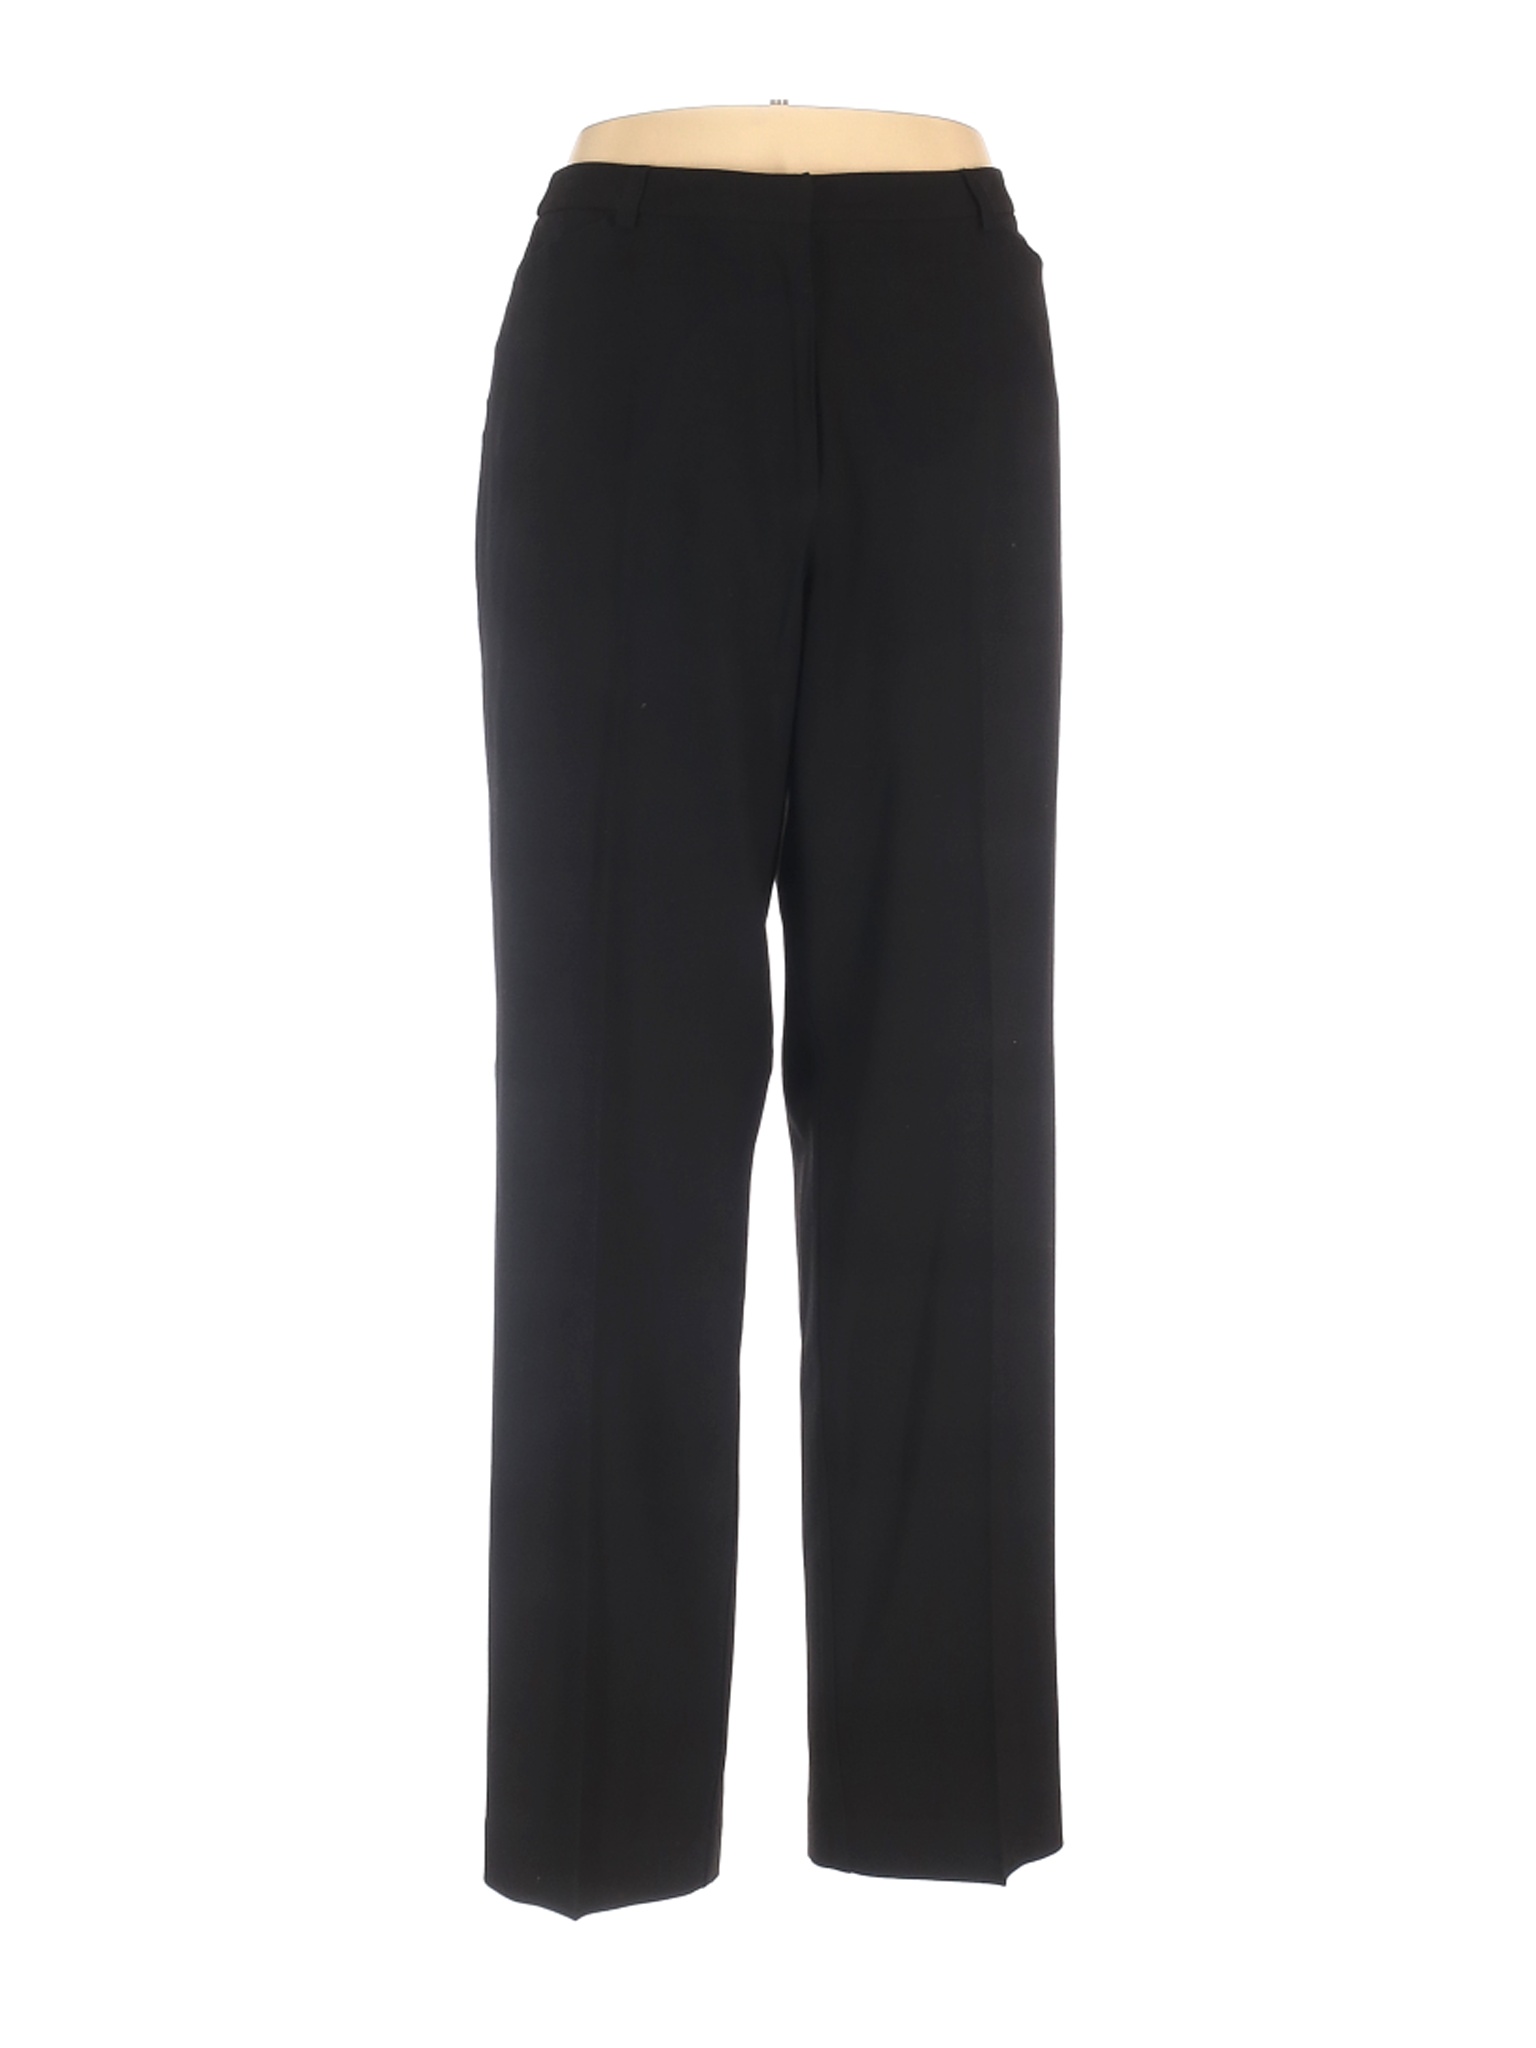 Liz Claiborne Women Black Dress Pants 16 | eBay